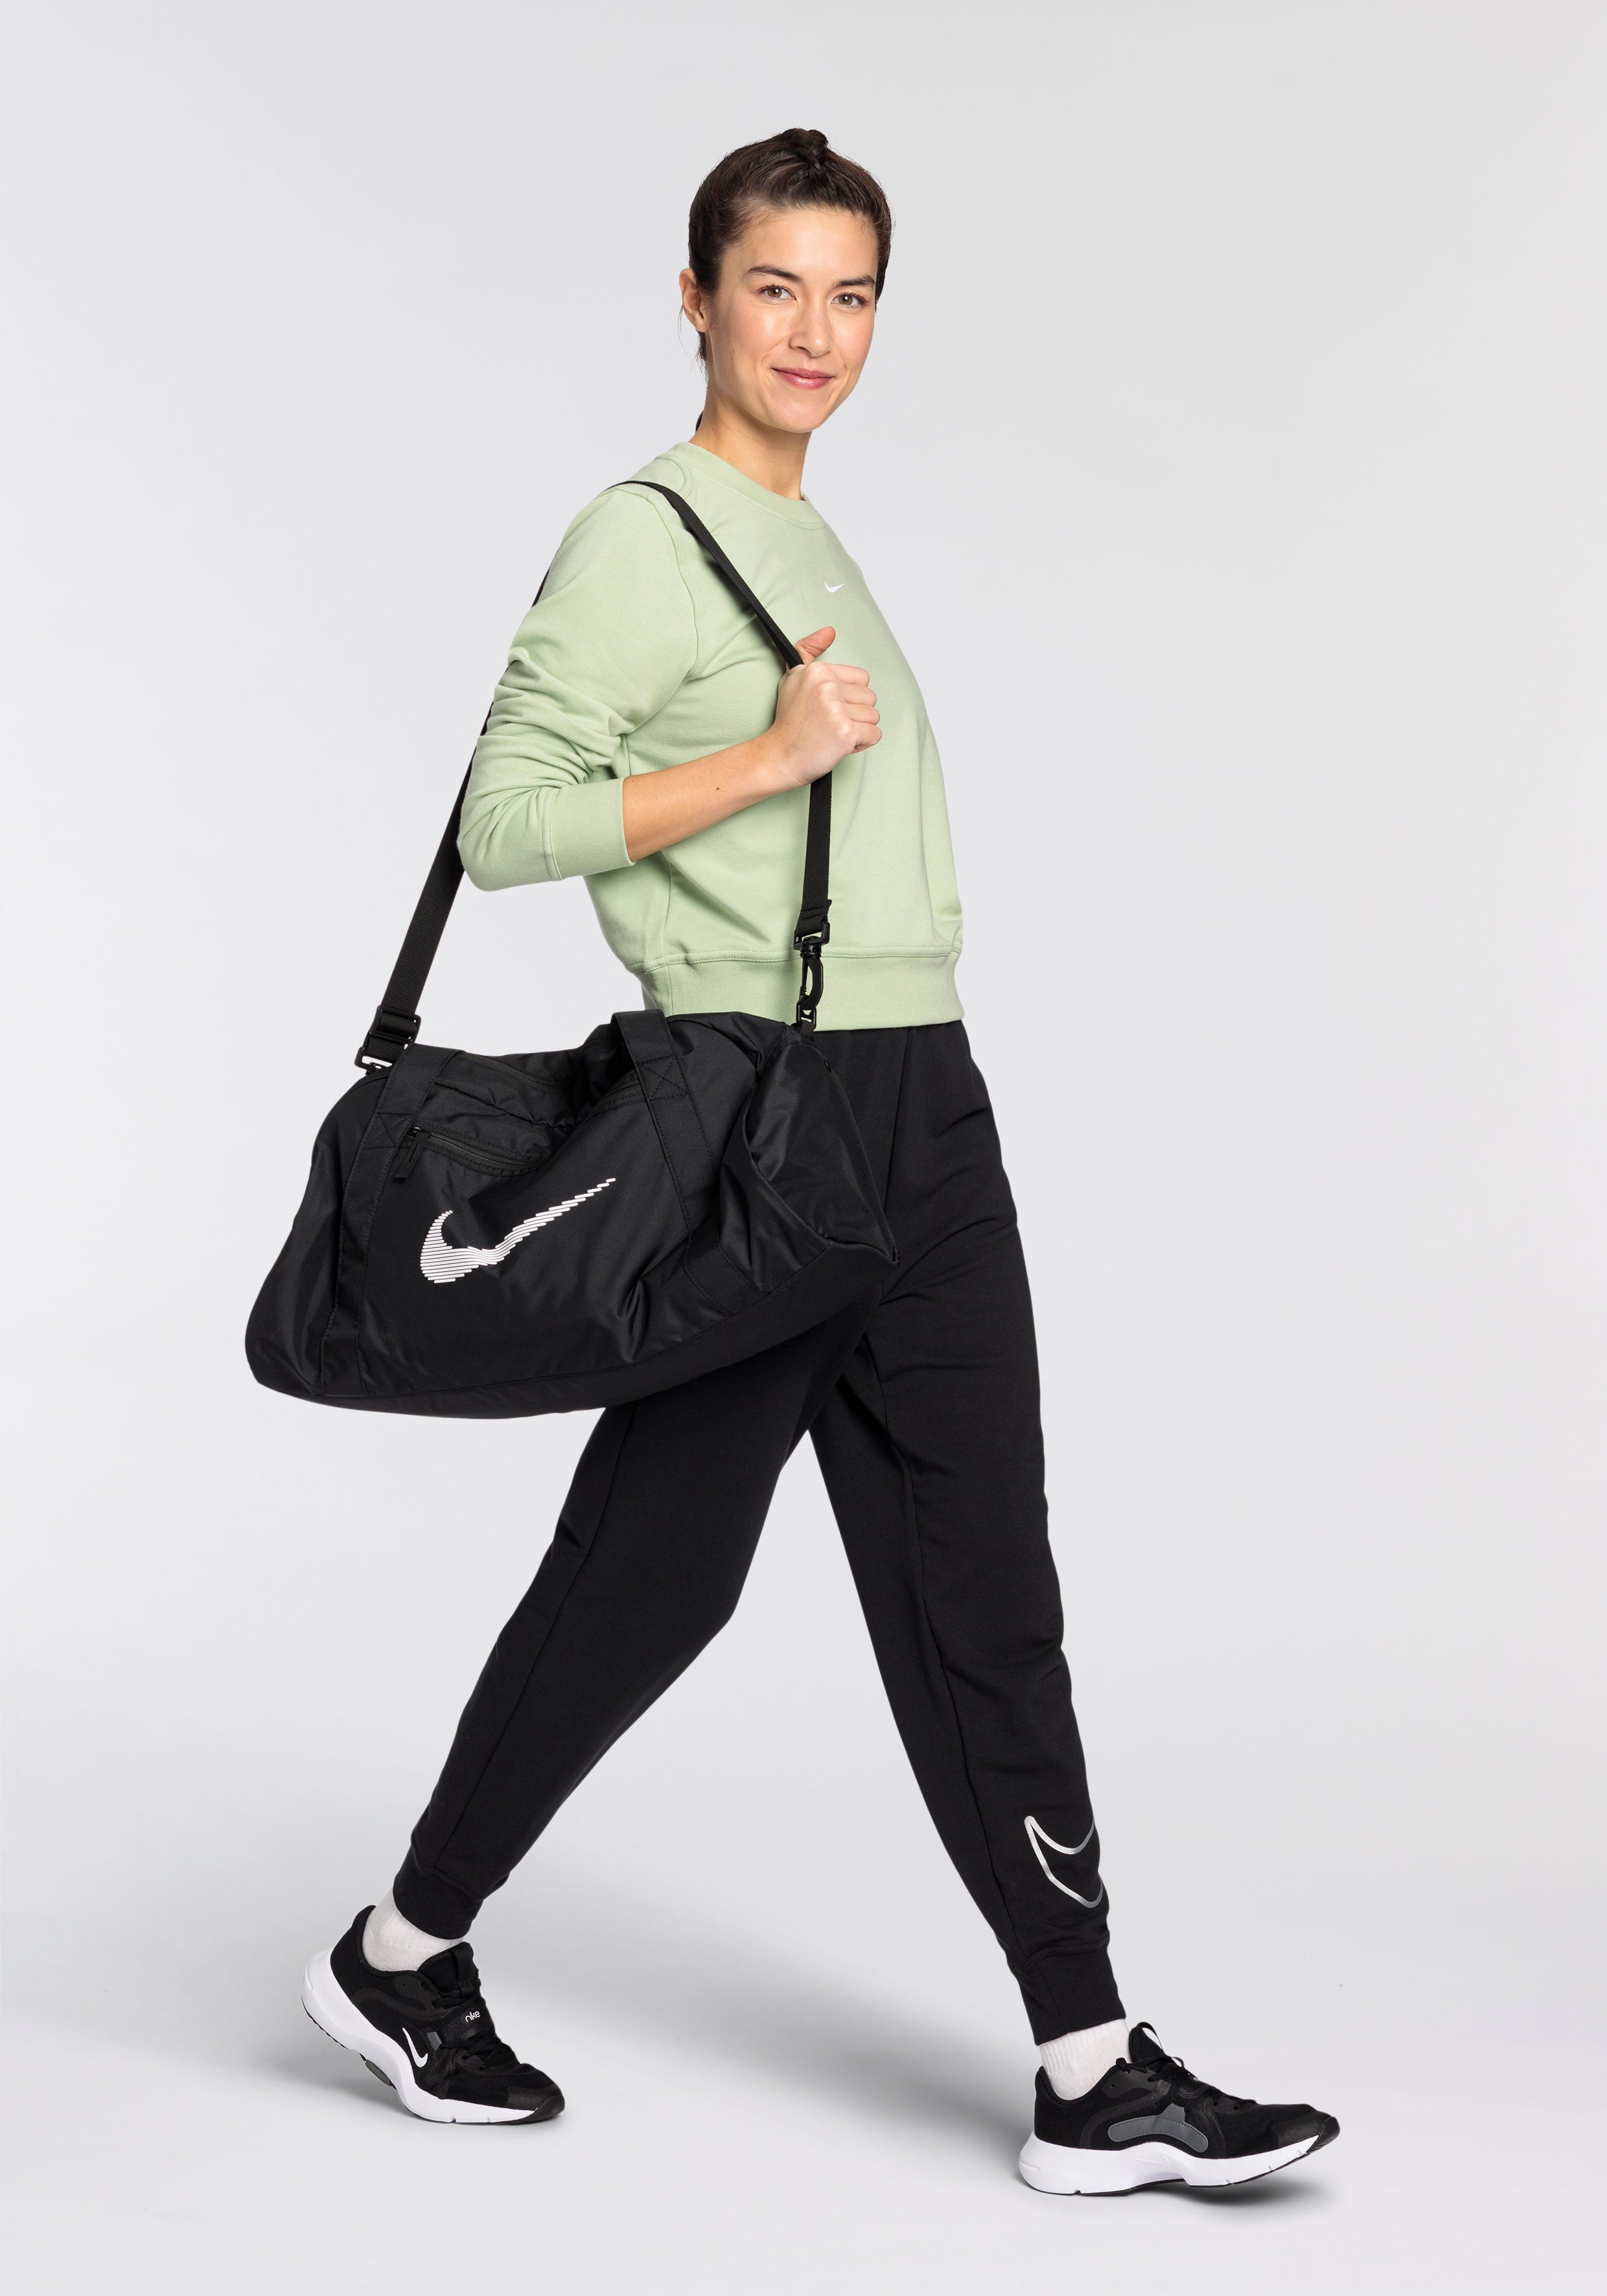 WOMEN'S CREW-NECK Nike ONE HONEYDEW/WHITE Trainingsshirt LONG-SLEEVED TOP DRI-FIT